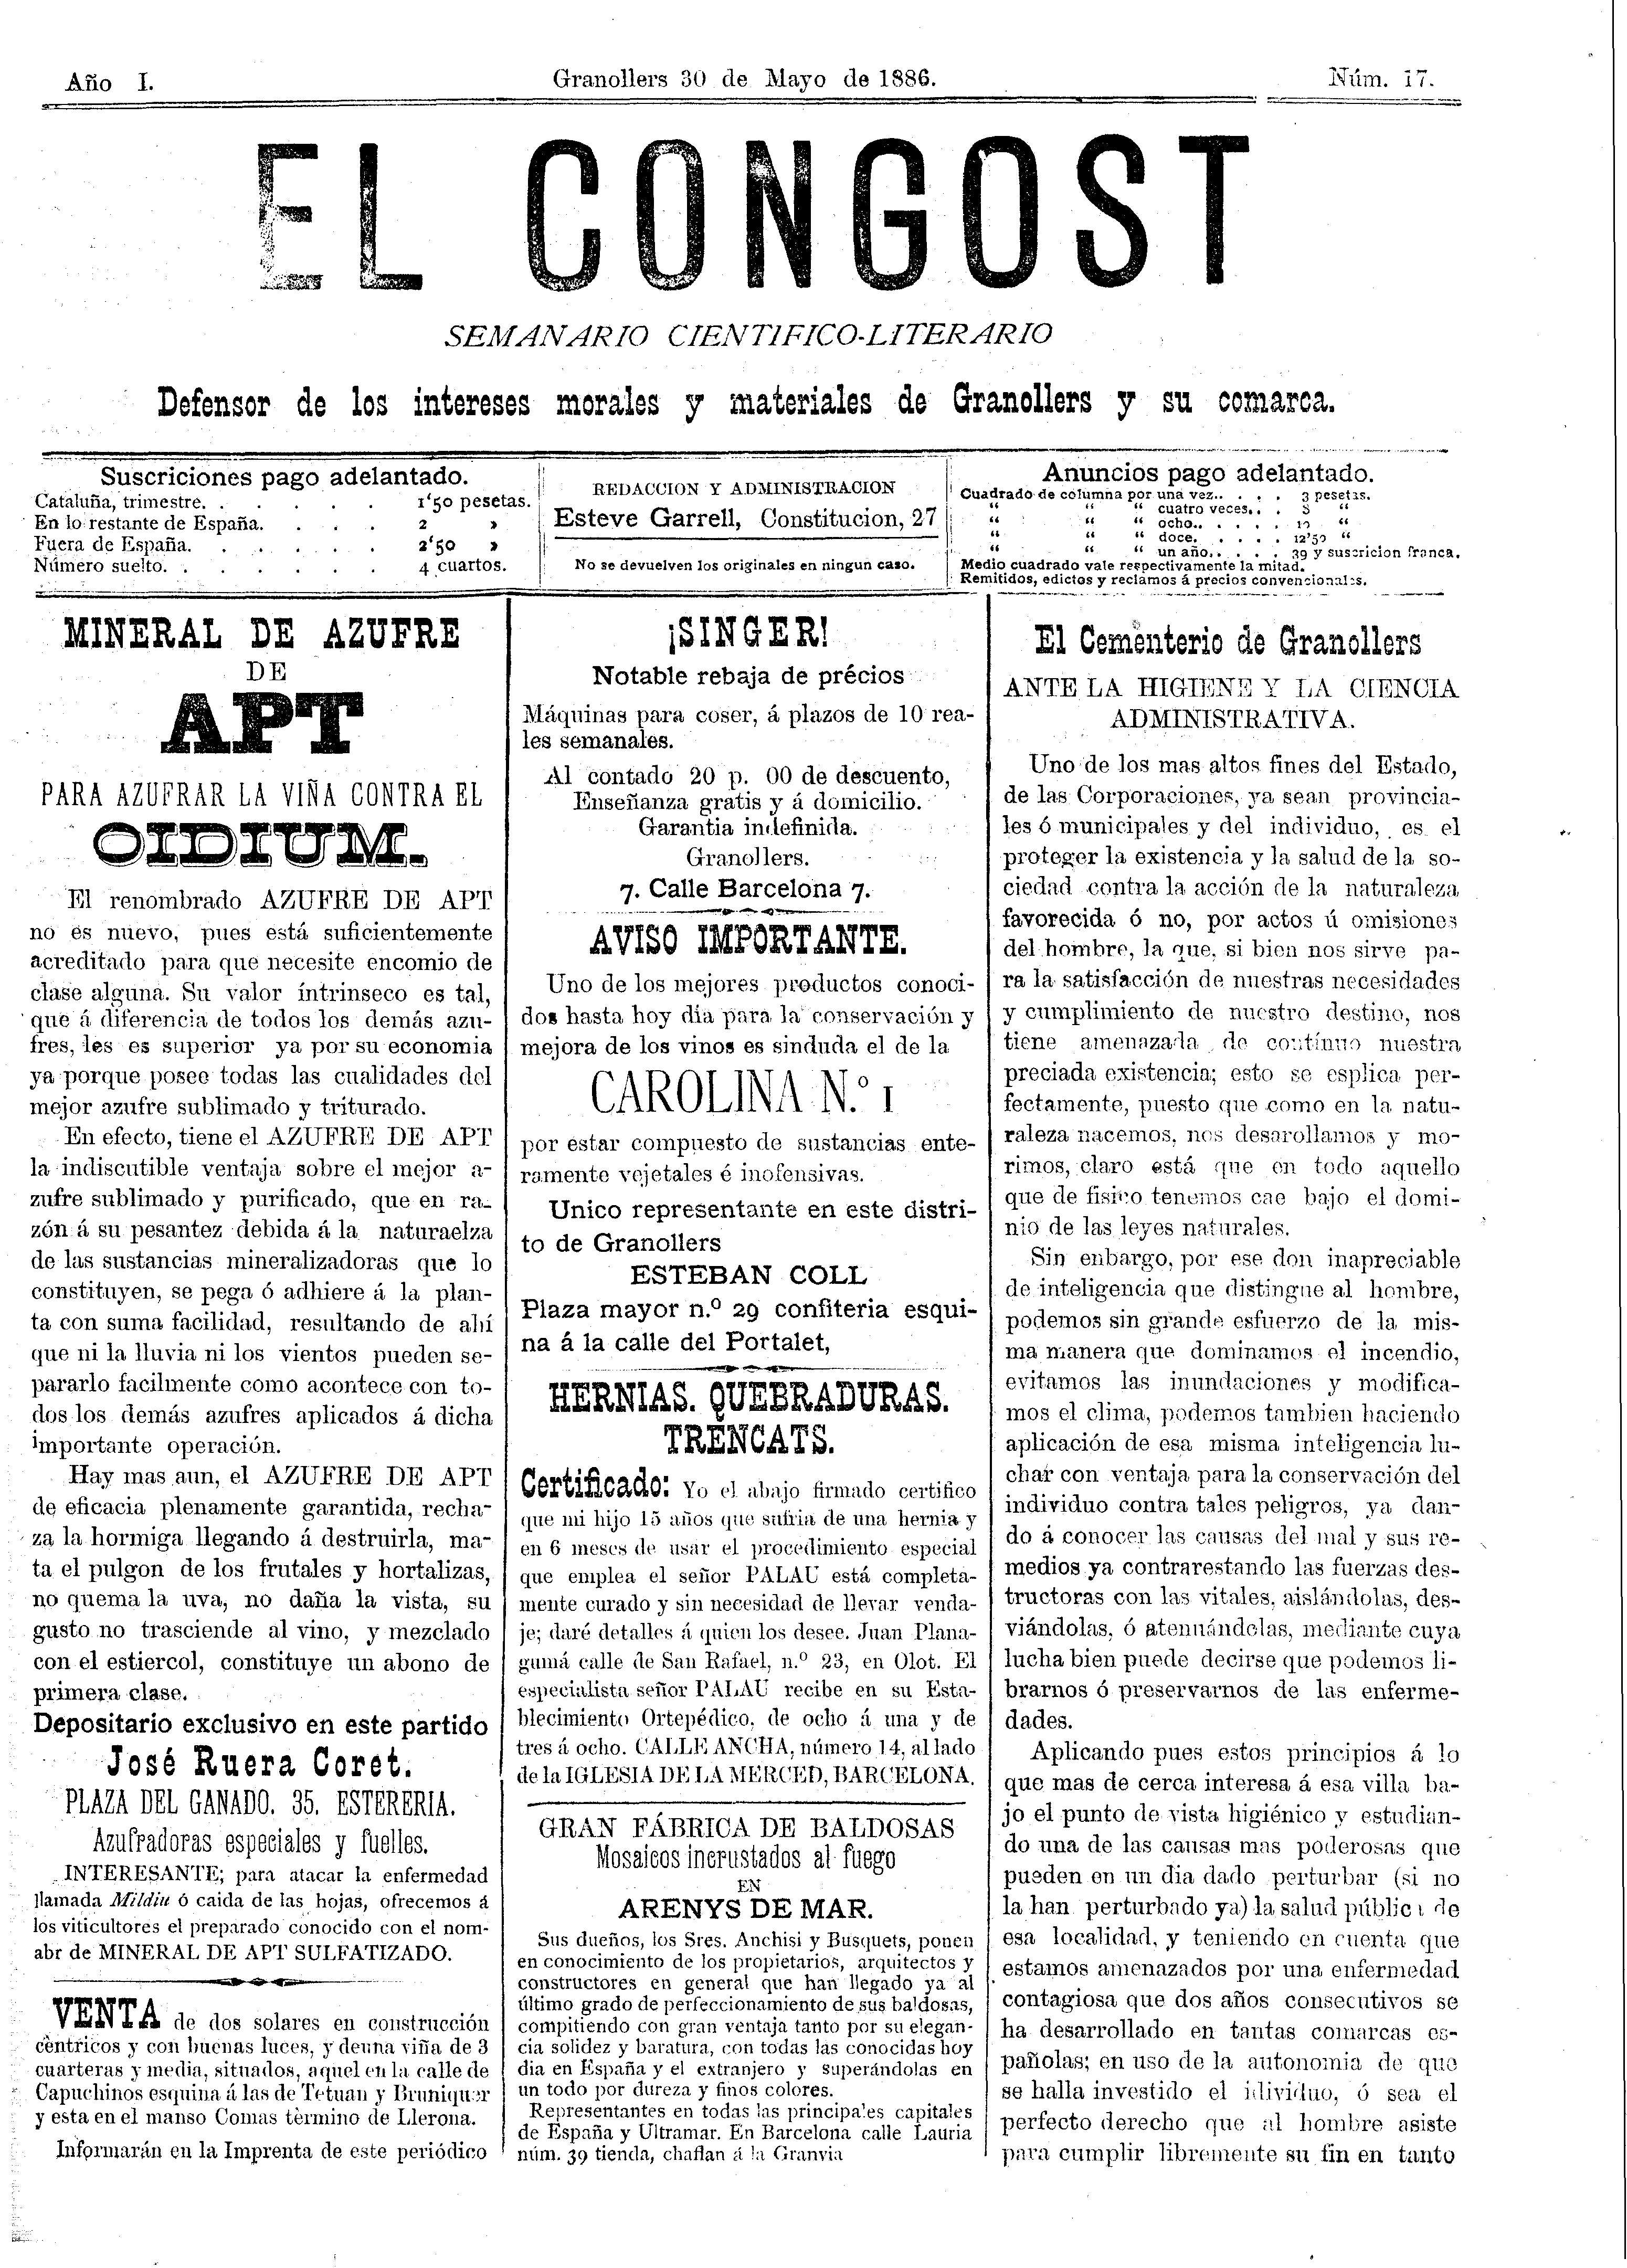 El Congost, 30/5/1886 [Exemplar]